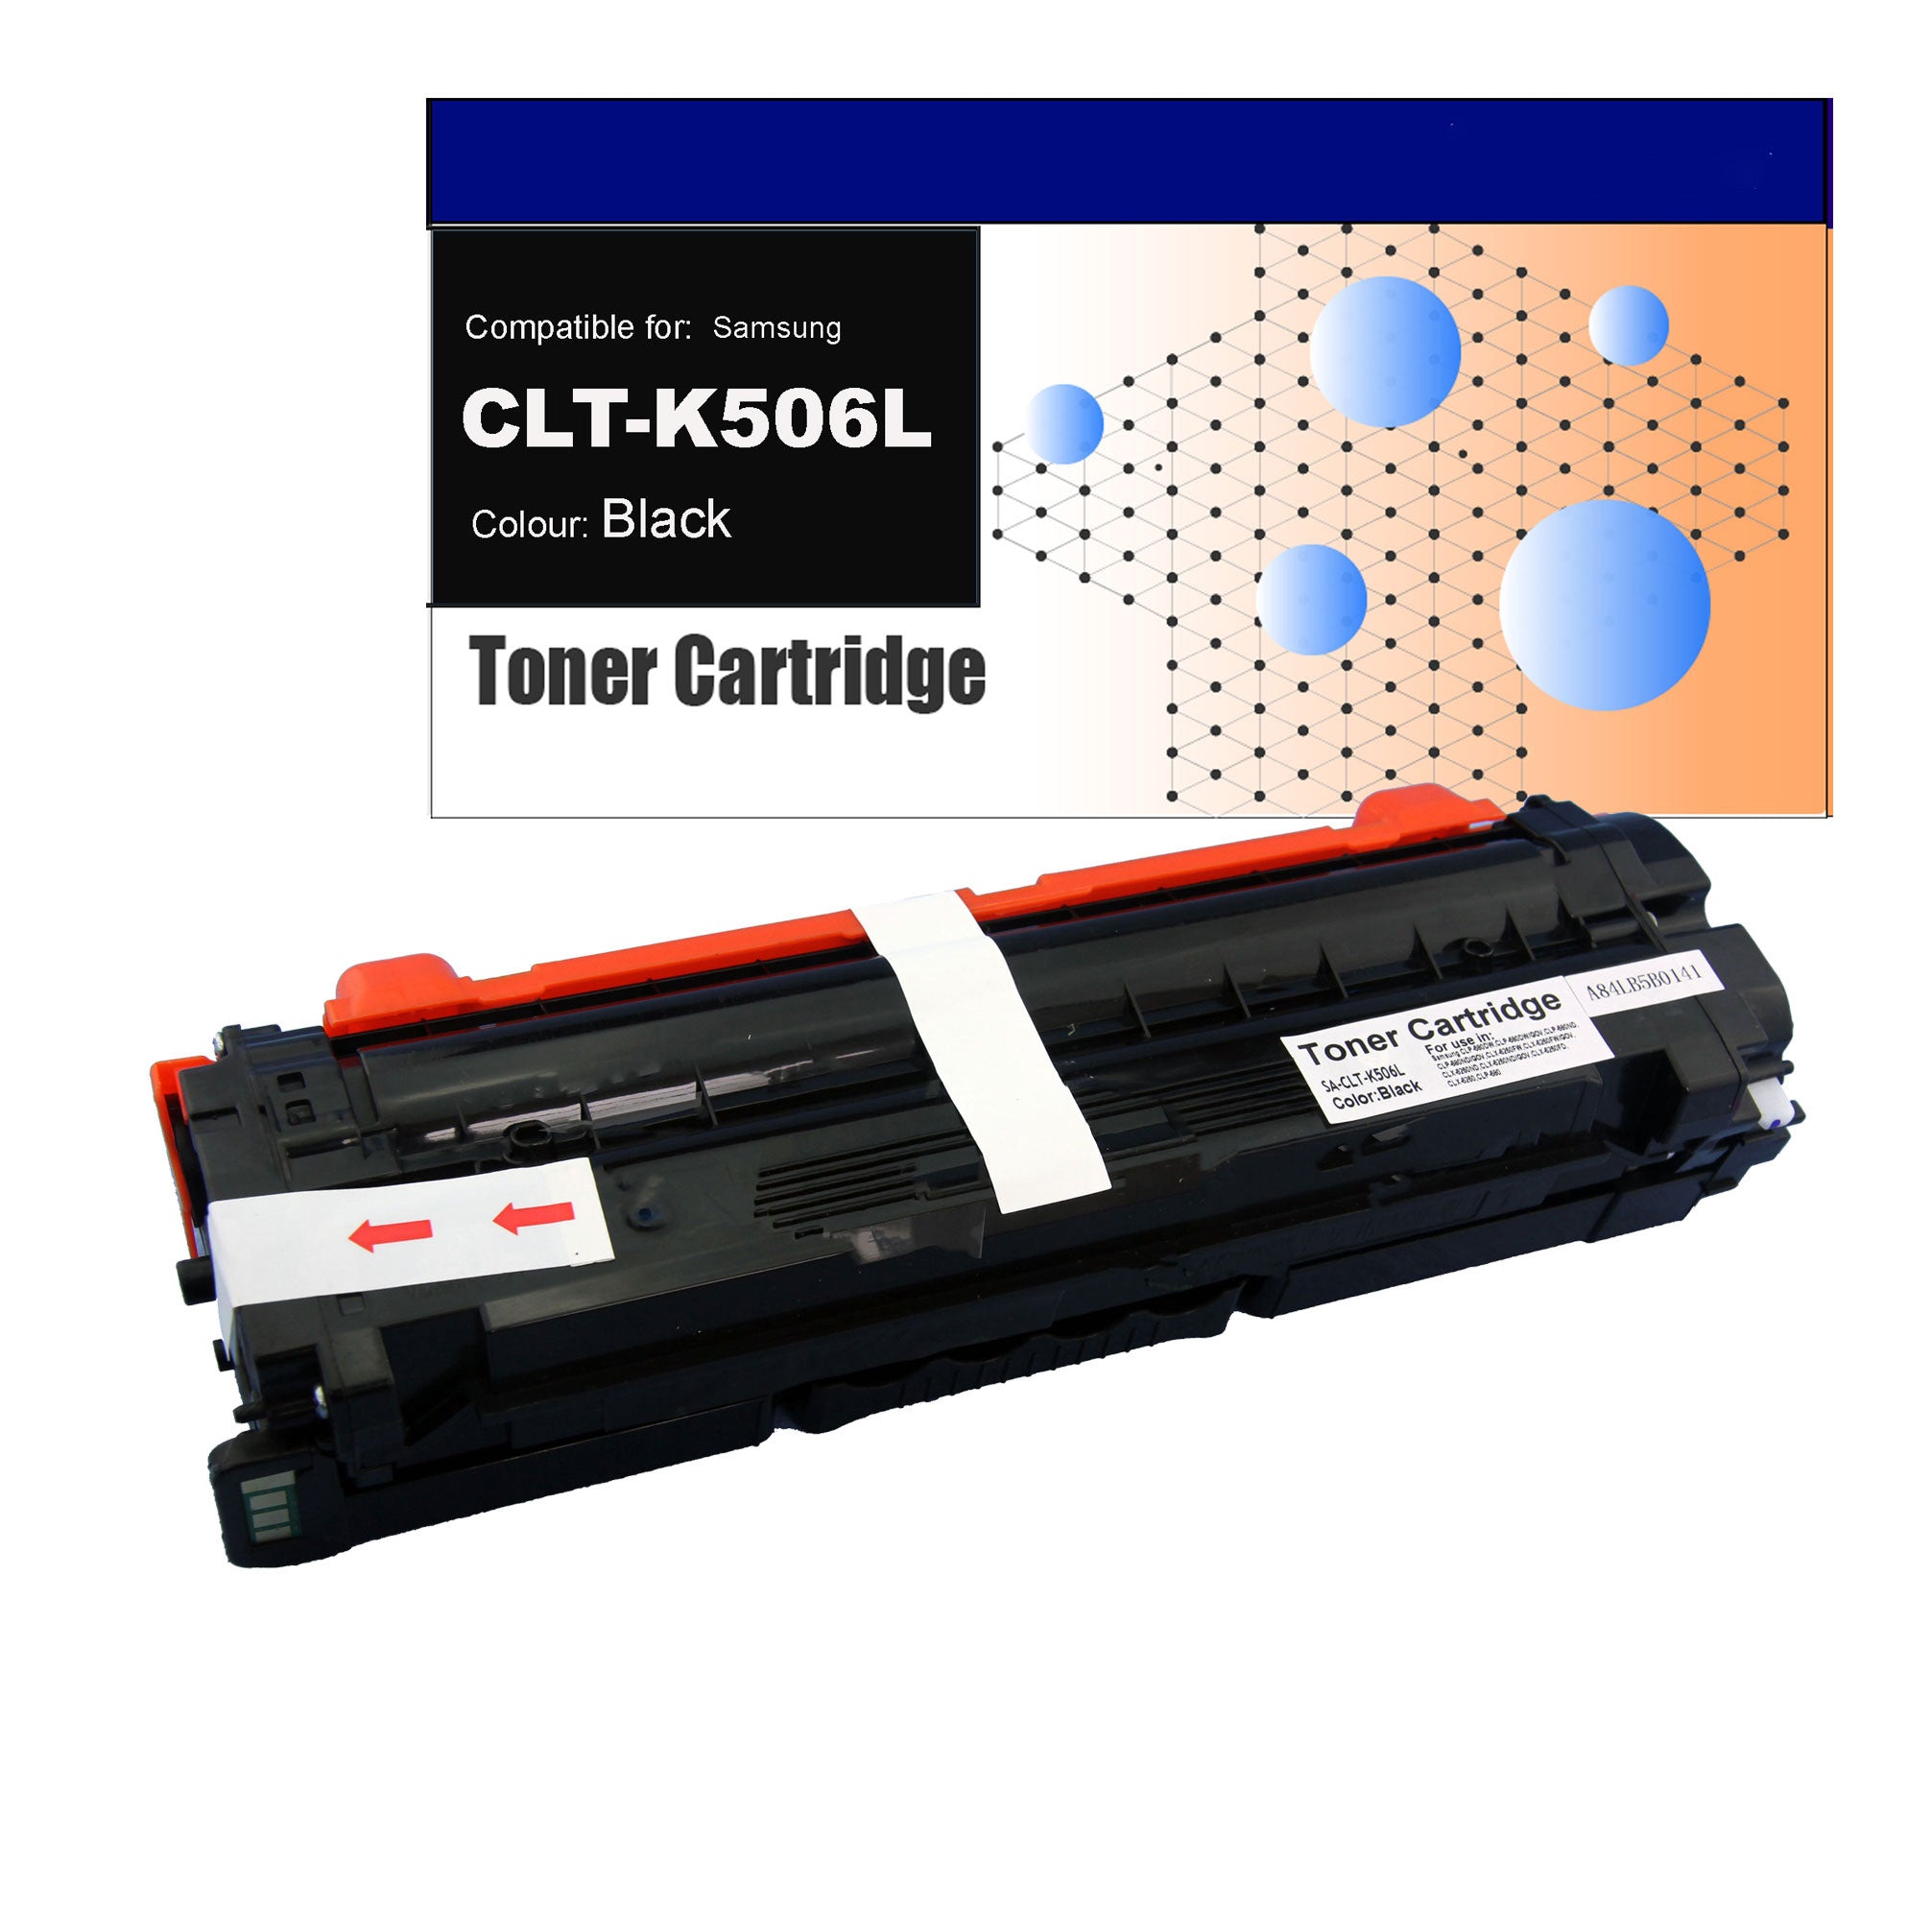 Compatible Toner for Samsung CLT-K506L Black Toner Cartridges